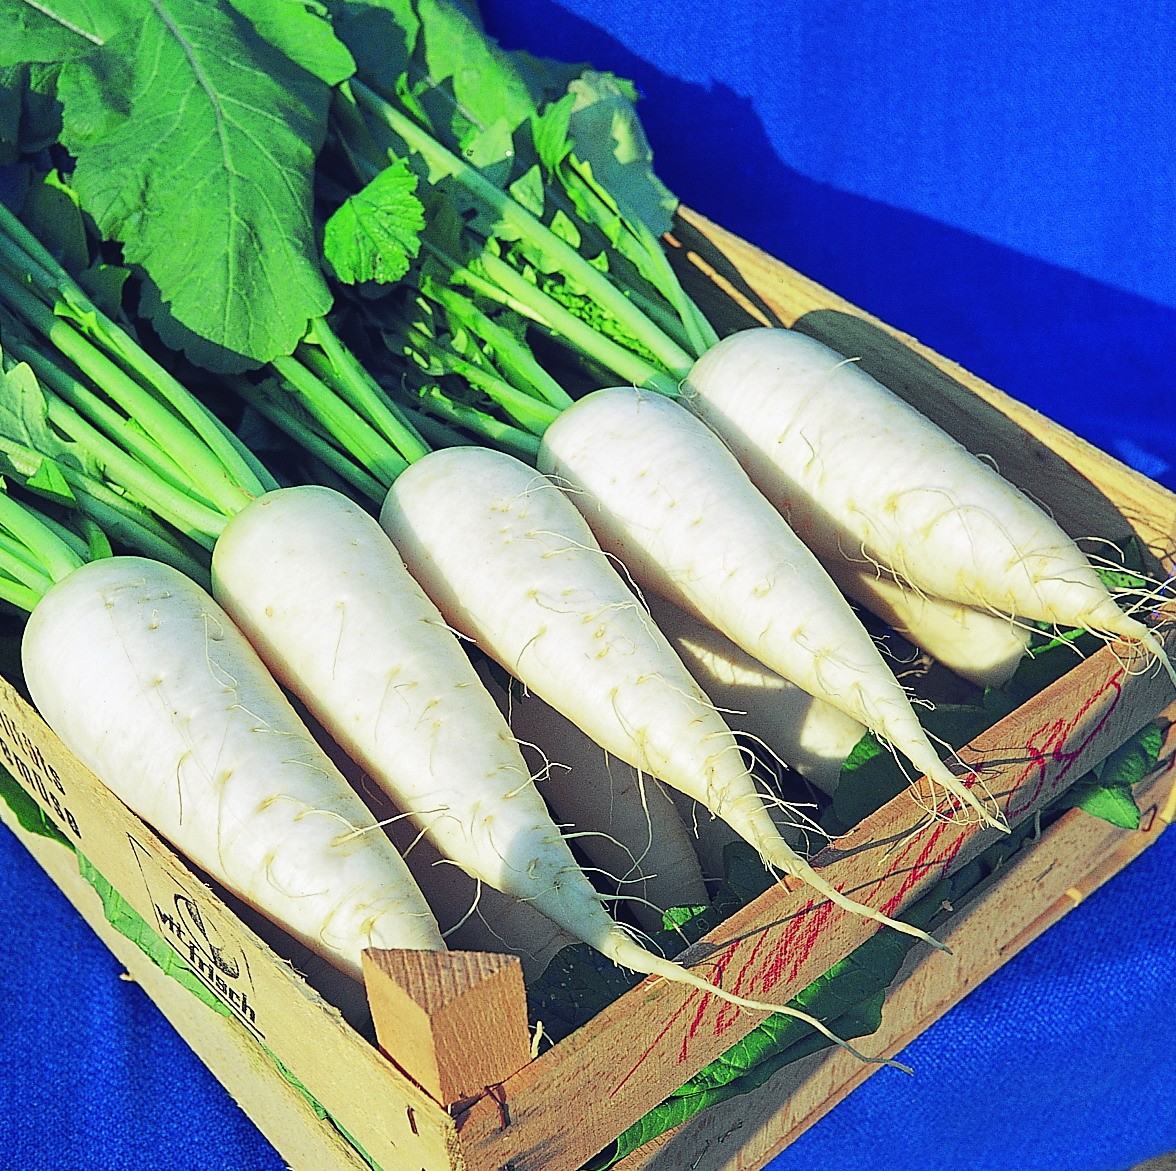 Mittelalterliche Gemüse Saatgut-Box S (Karton)